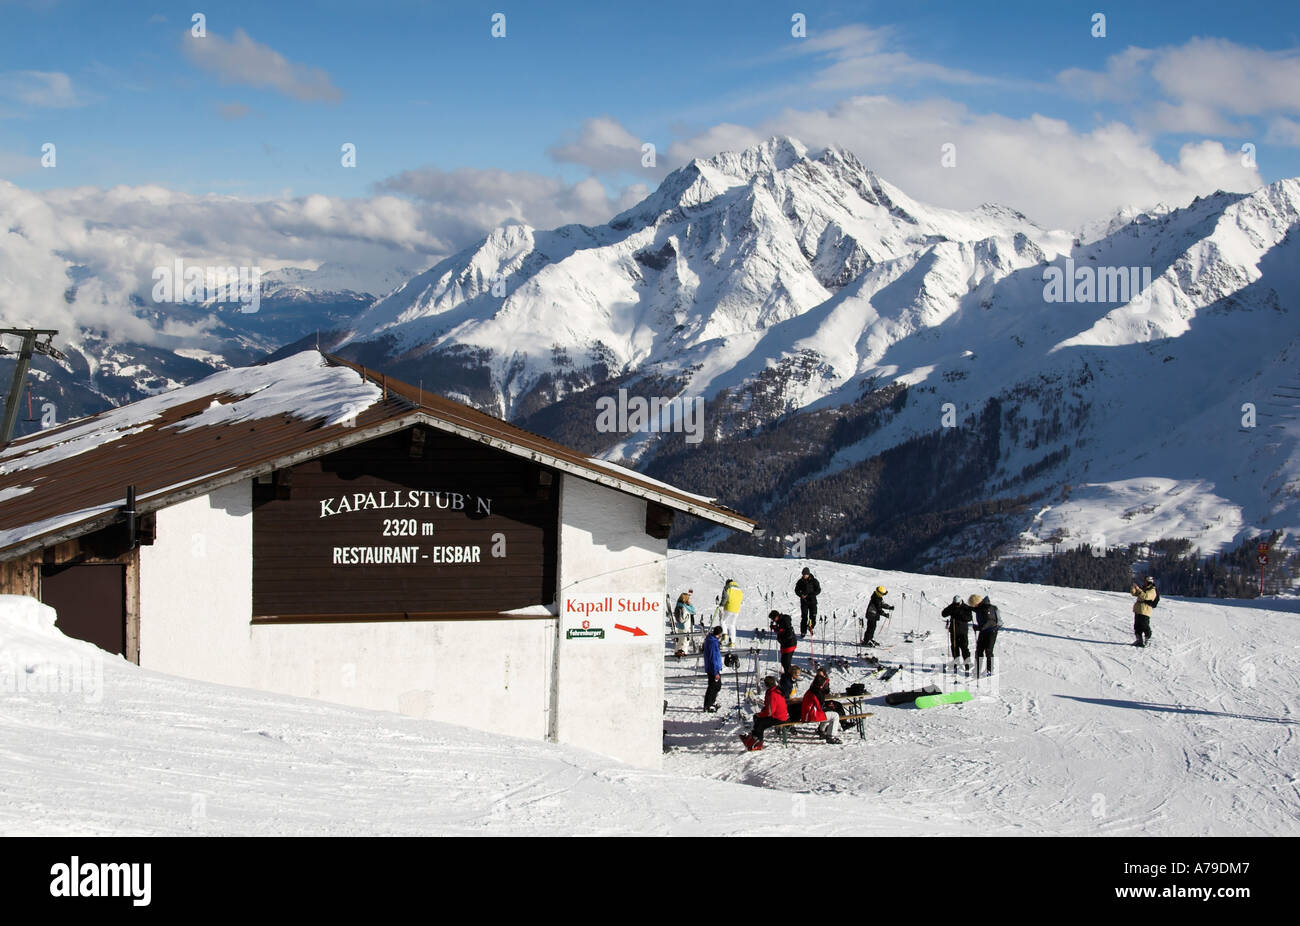 Kapallstuben restaurant, near Kapall lift unload station, ski resort of St. Anton am Arlberg, Tirol, Austria Stock Photo